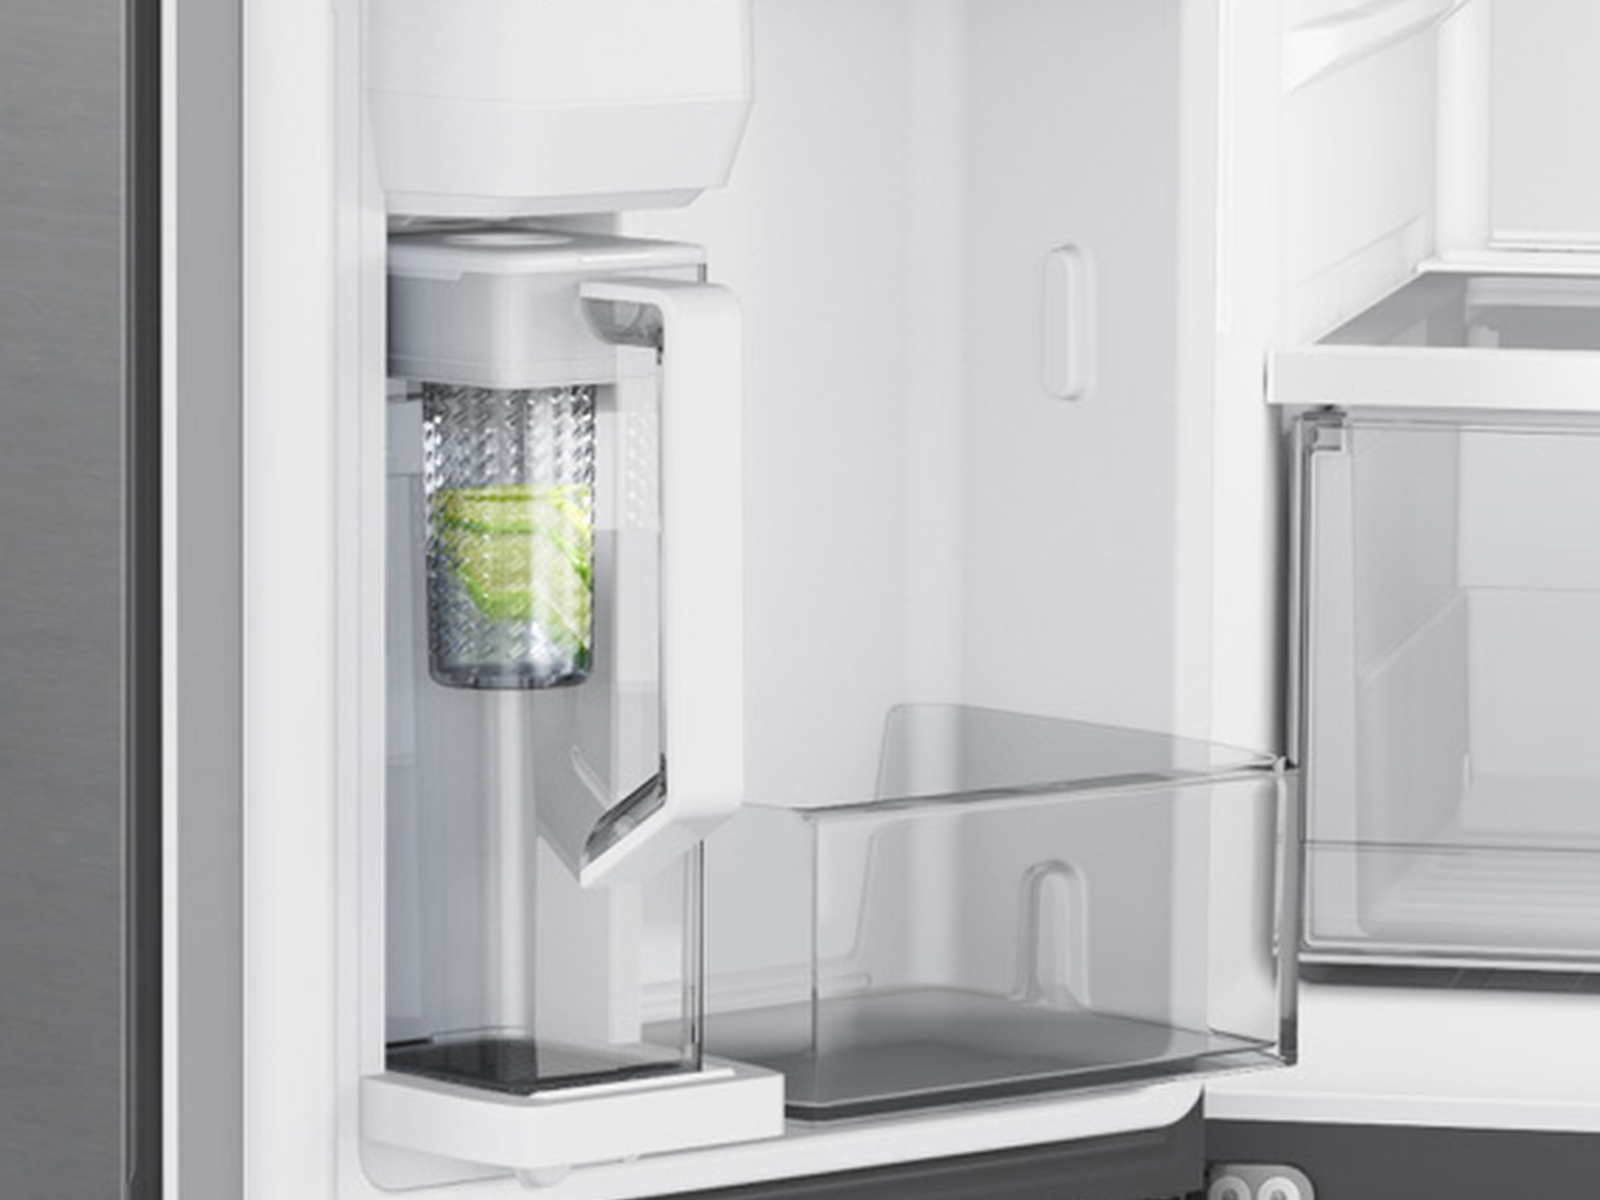 Samsung 29.2 Cu ft 4 Door Flex Refrigerator - Stainless Steel